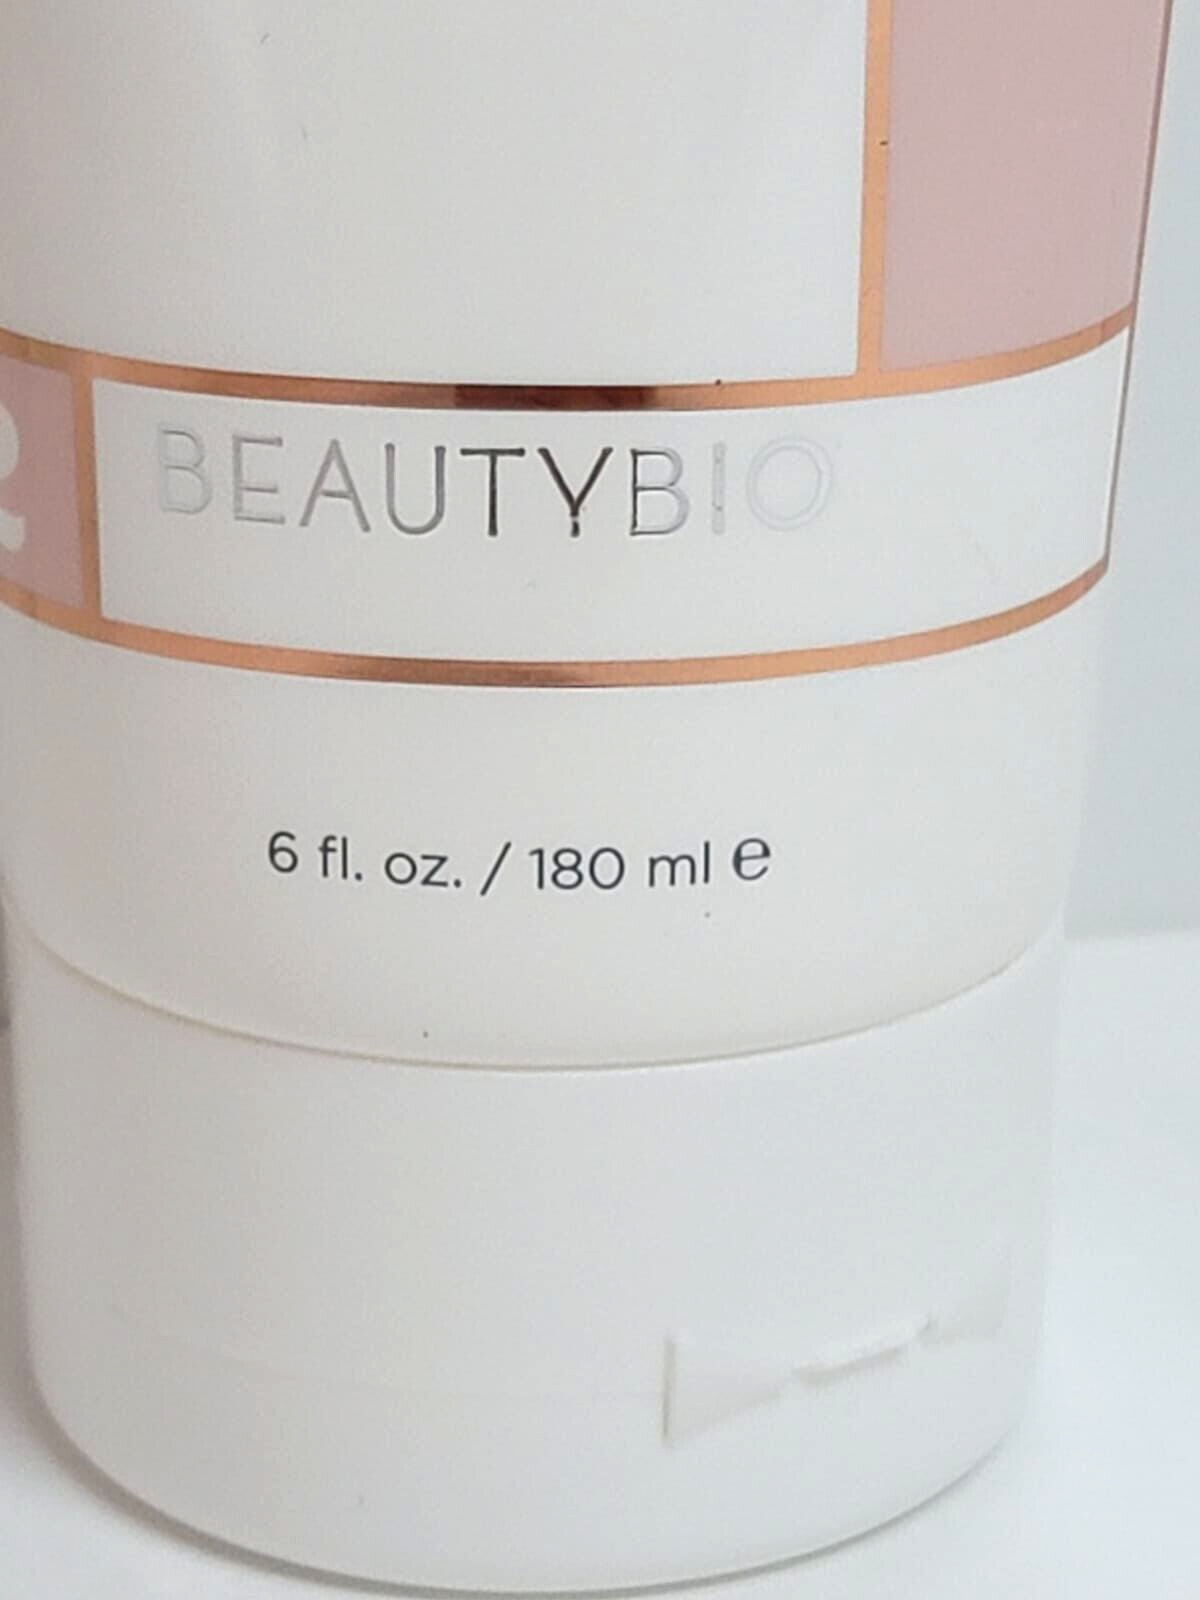 Beauty Bio The Sculptor Skin Firming Body Cream 6 Oz- NEW SEALED